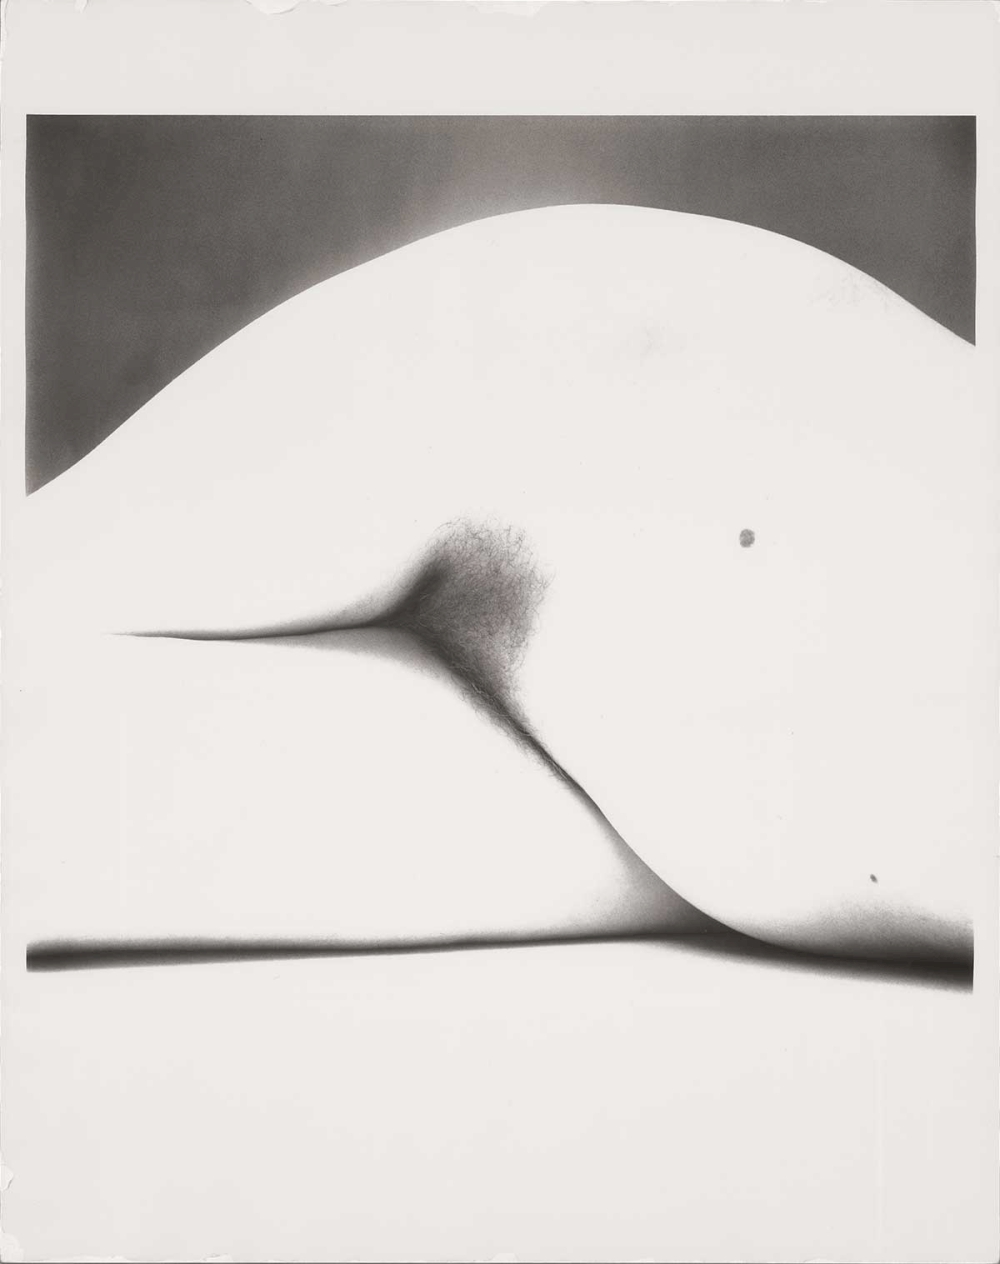 Irving Penn, Nude No. 147, New York ca. 1949-1950 © The Irving Penn Foundation